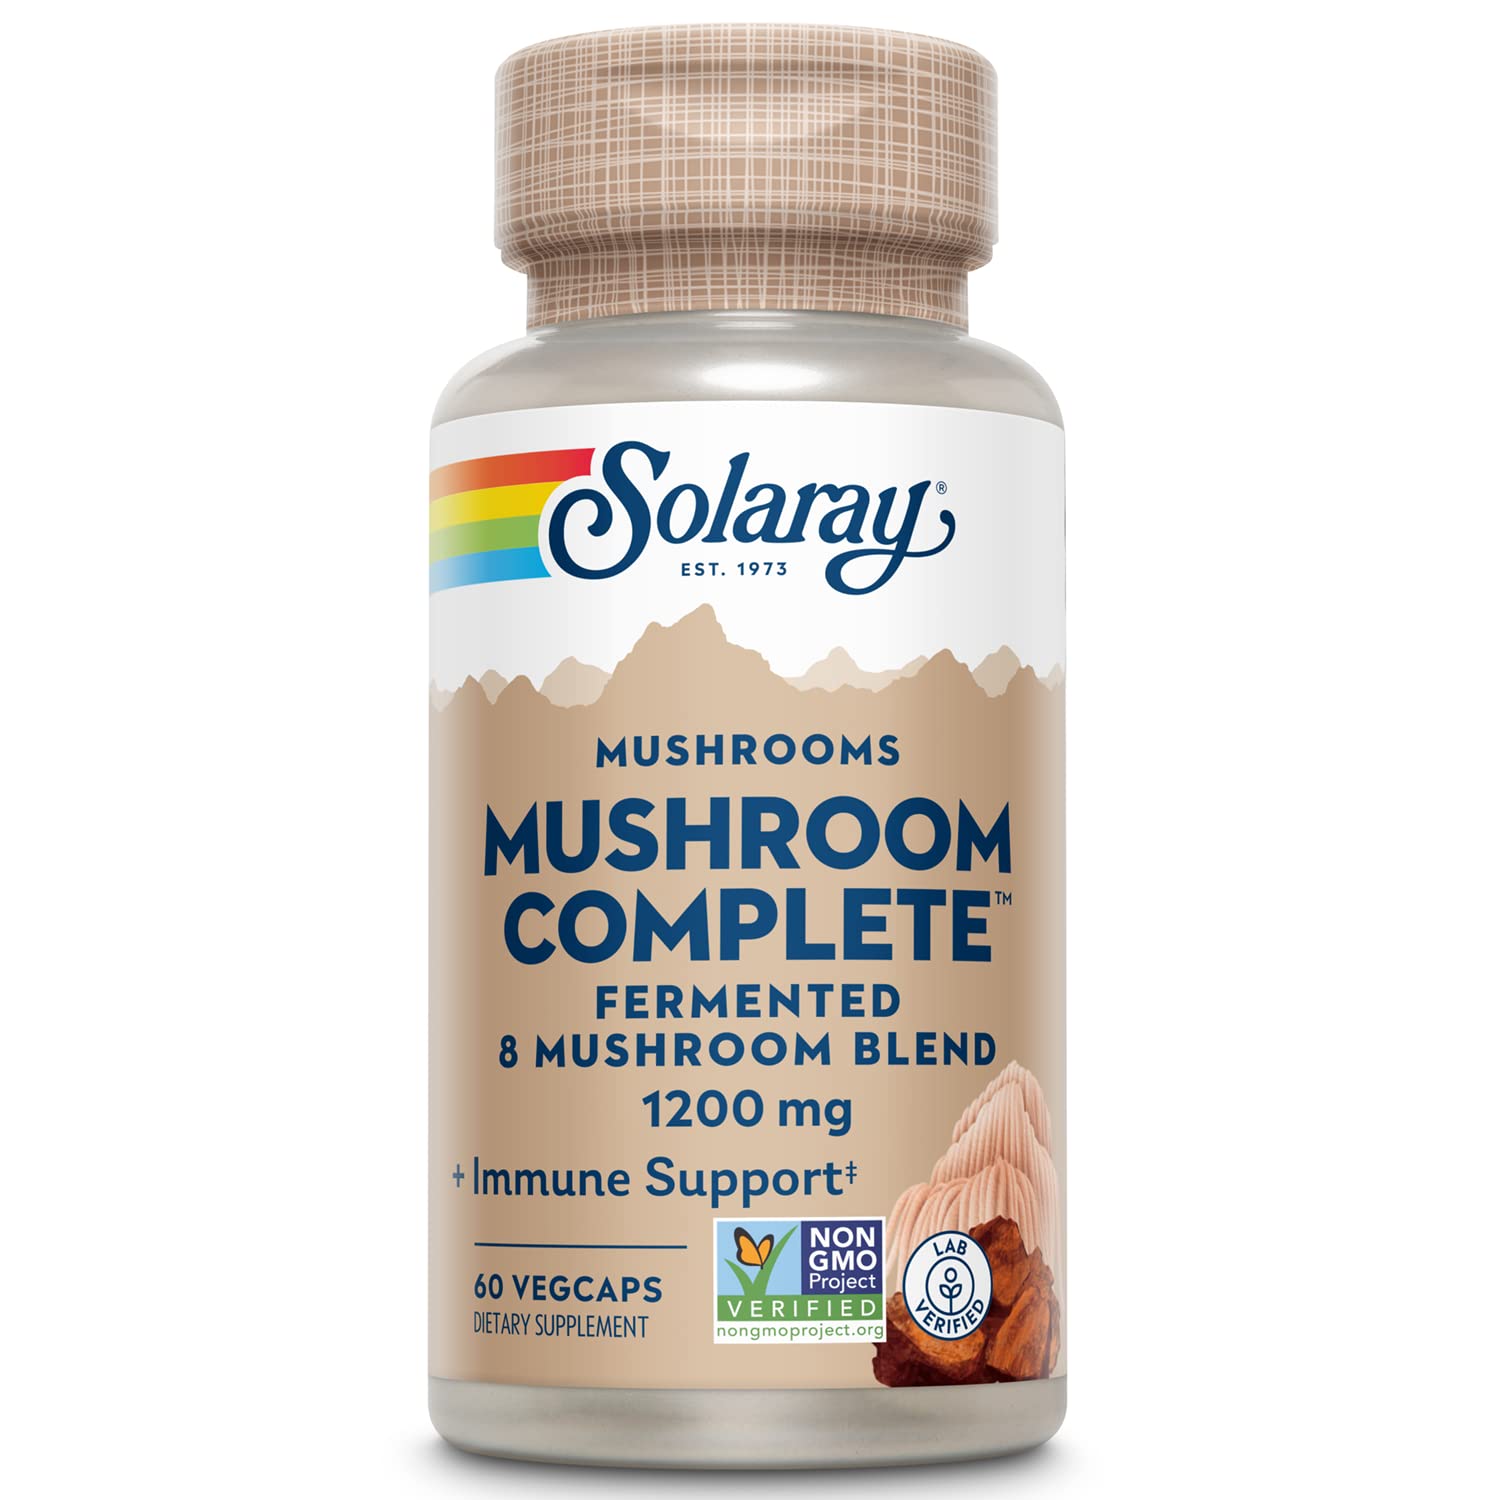 Solaray Organically Grown Fermented Mushroom Complete 60ct VegCap